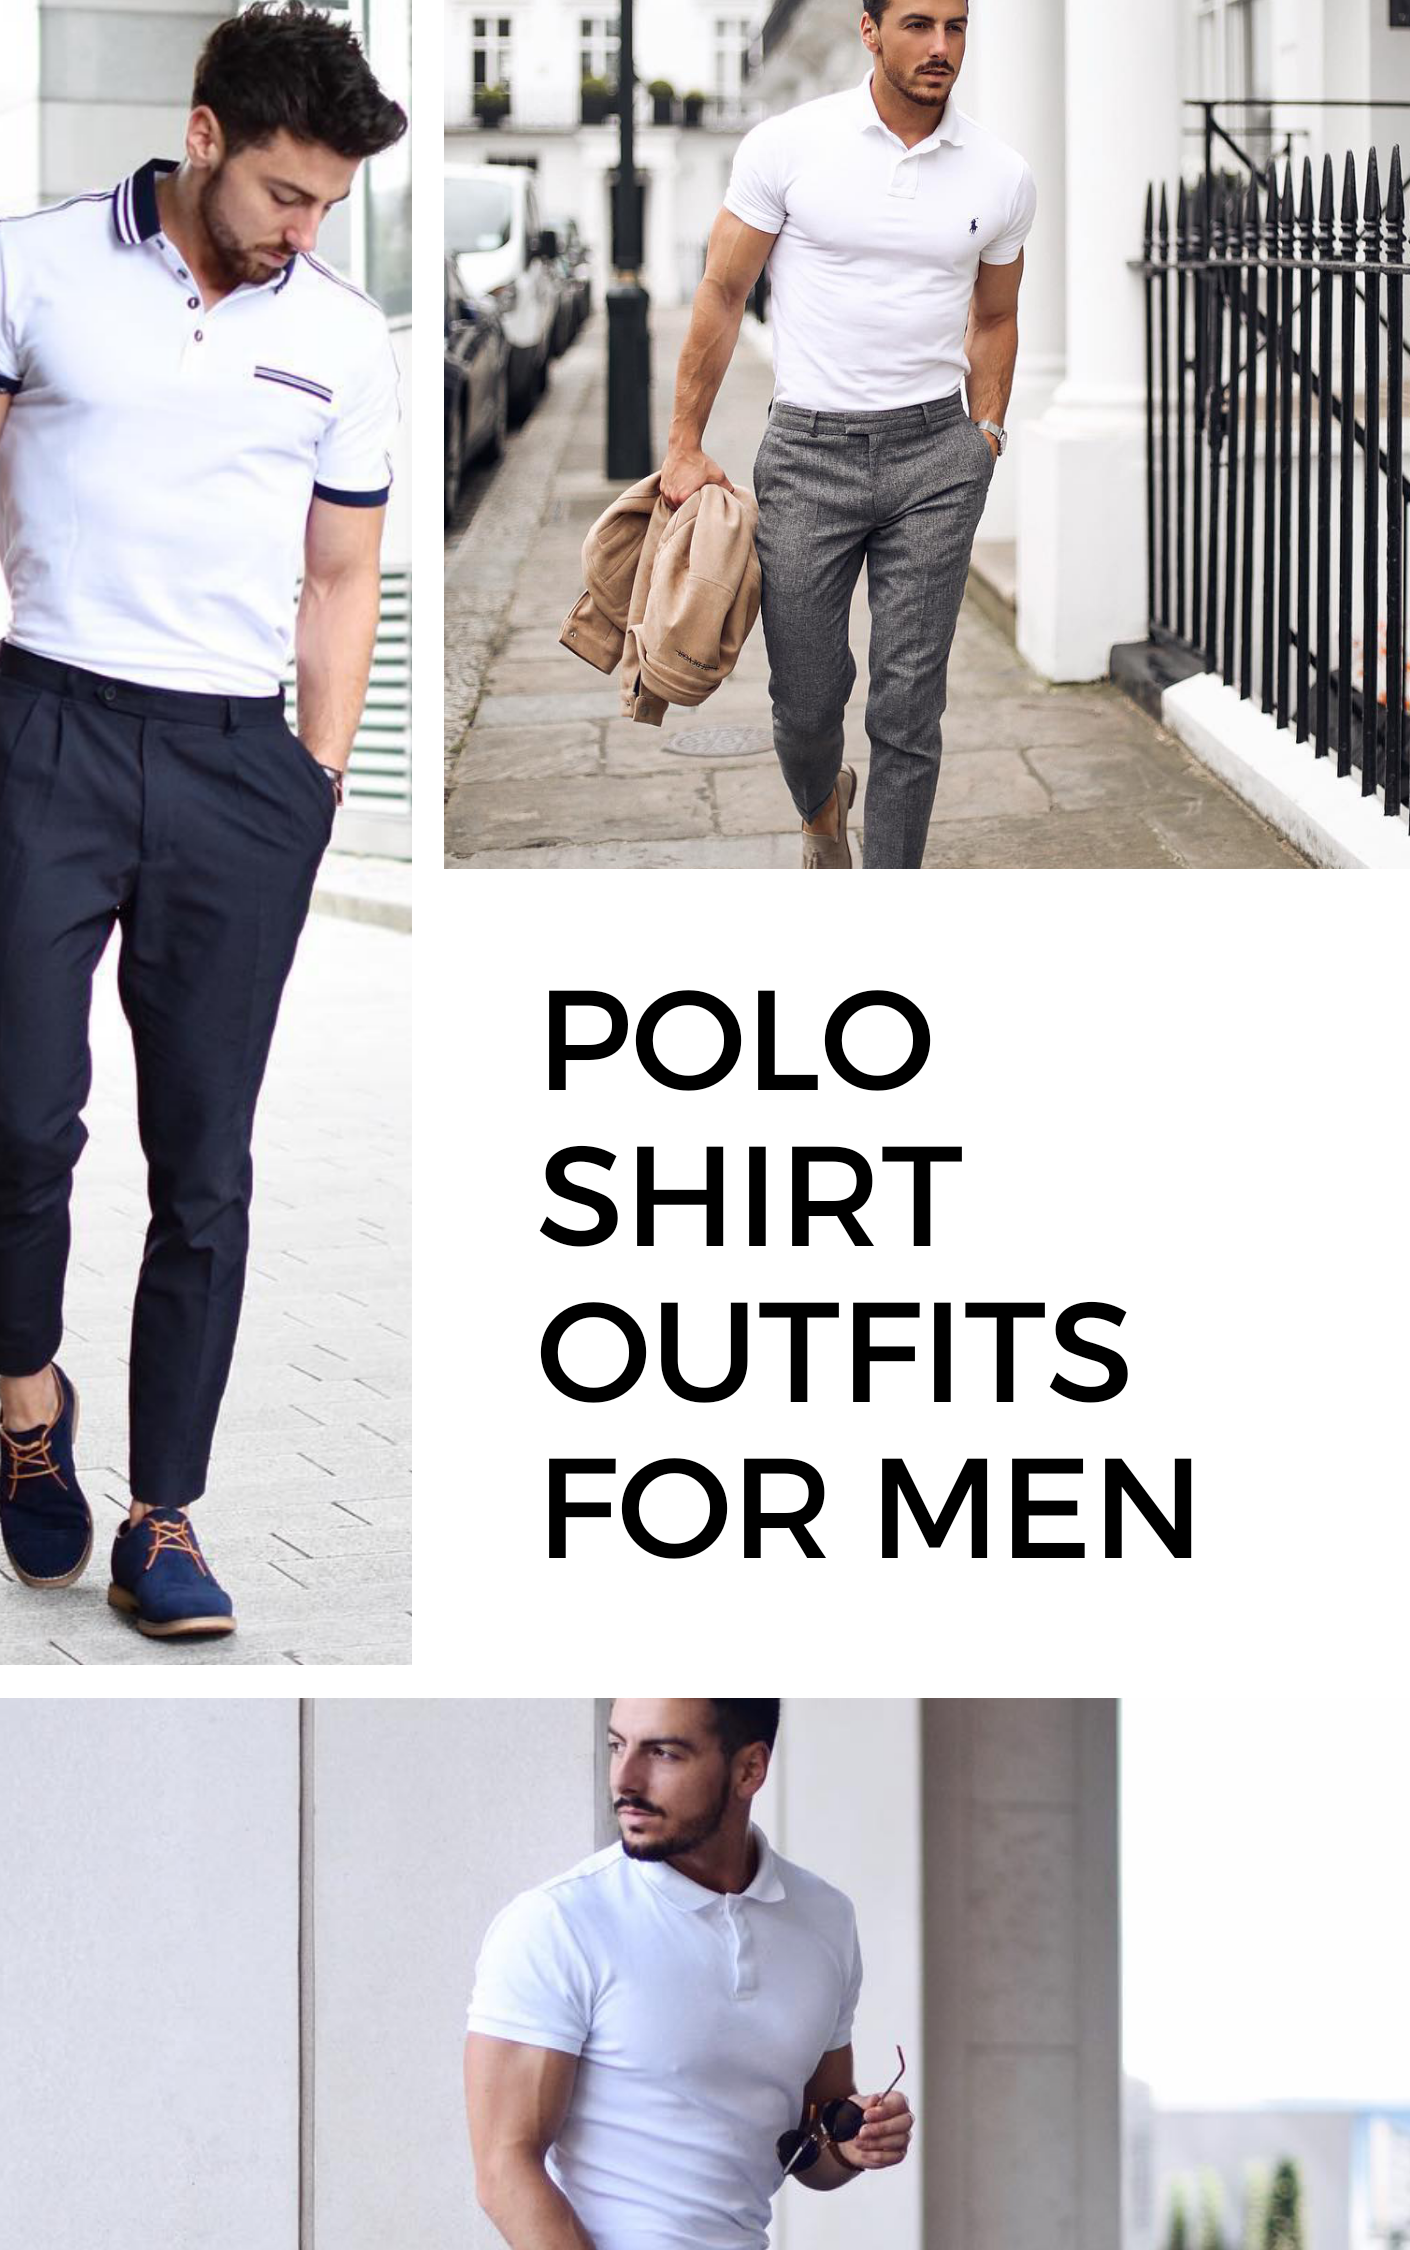 White Polo Shirt Outfit Ideas For Men #poloshirt #shirt #outfitideas # ...